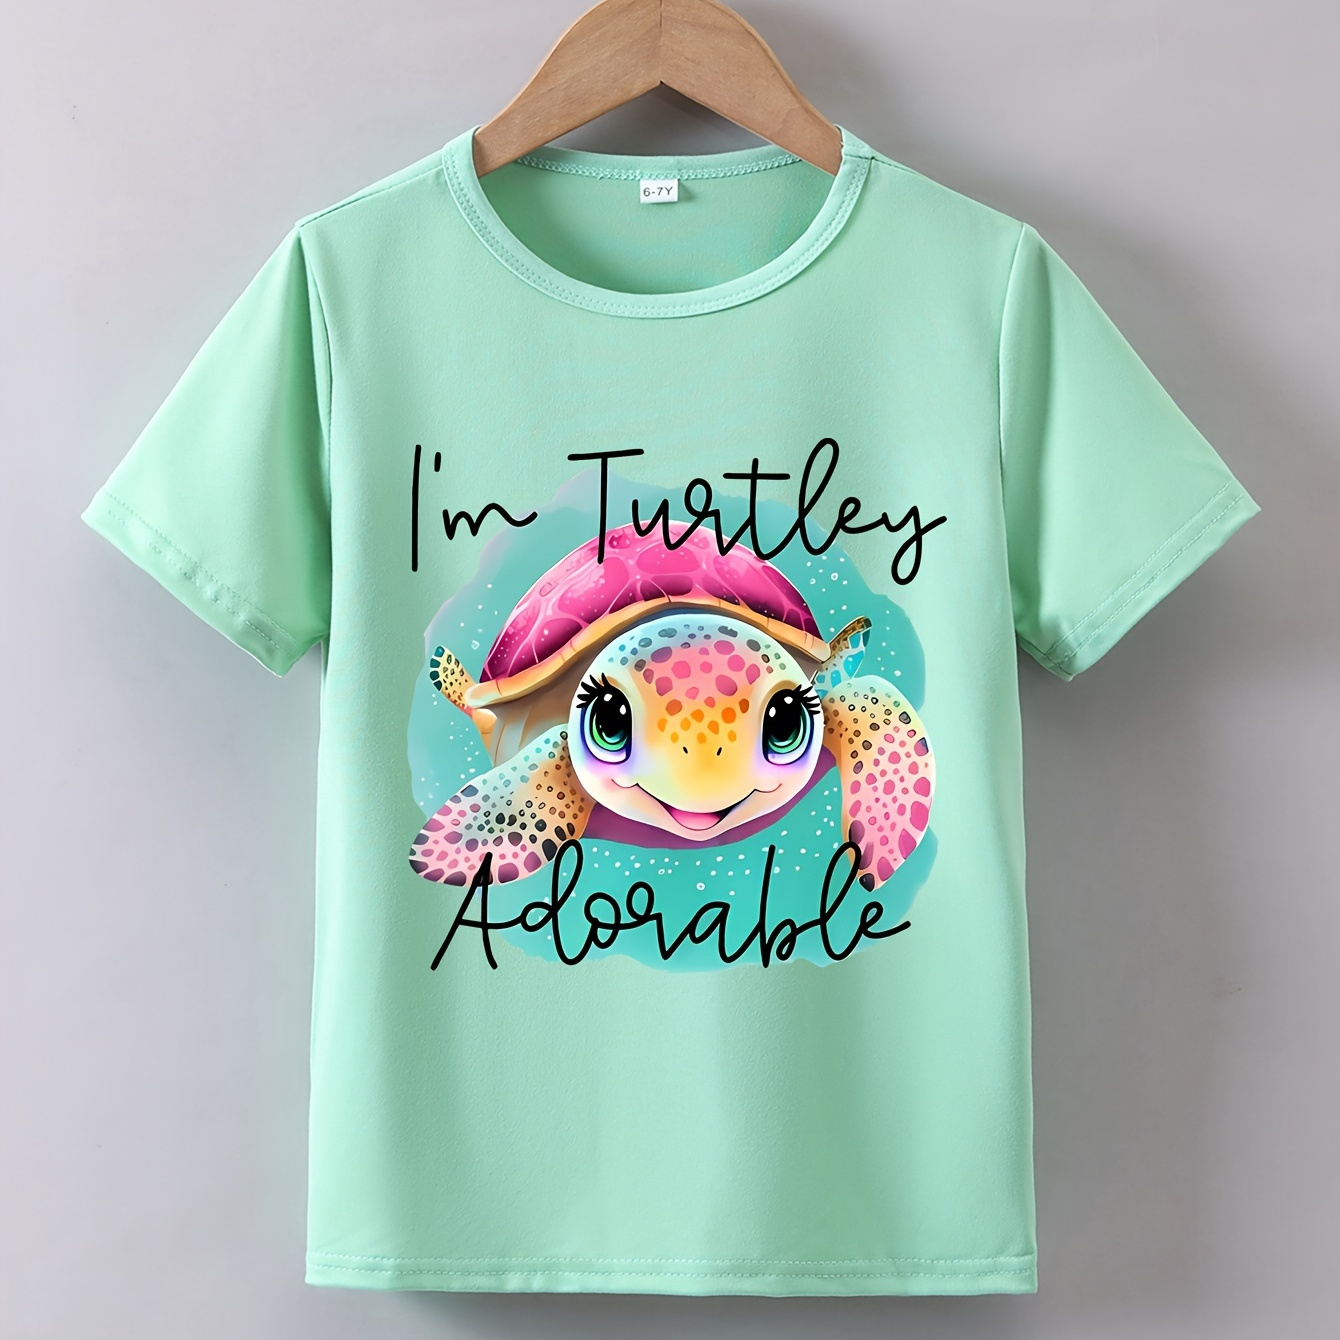 

turtle" Graphic Print Creative T-shirts, Soft & Elastic Comfy Crew Neck Short Sleeve Tee, Girls' Summer Tops